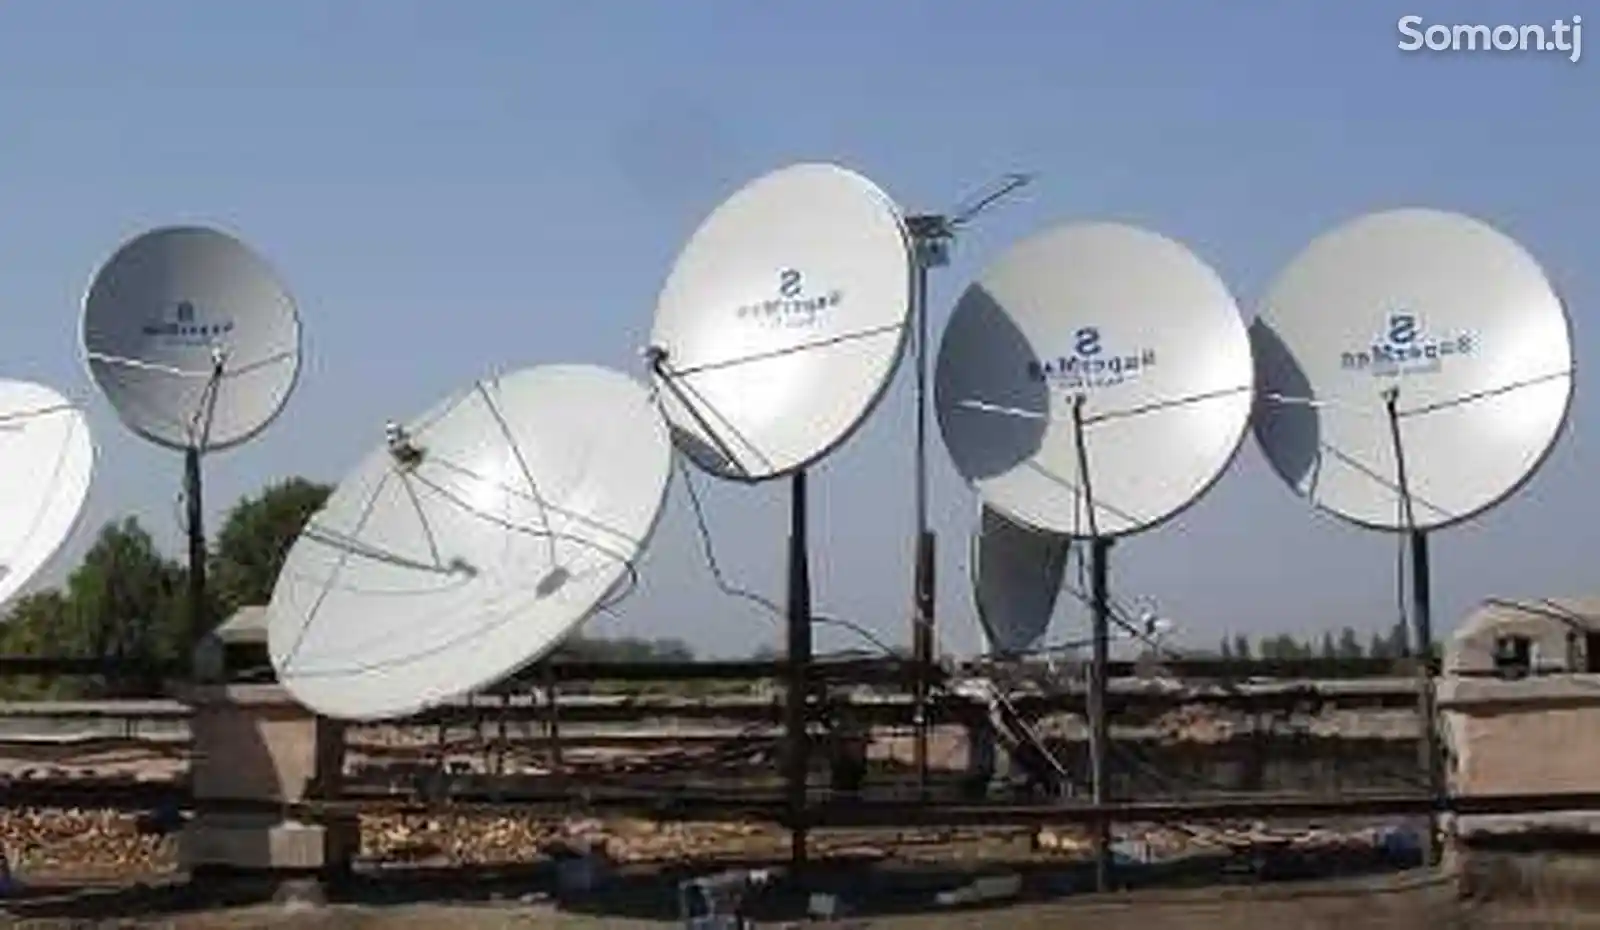 Установка и настройка спутниковых антенн и прошивка база